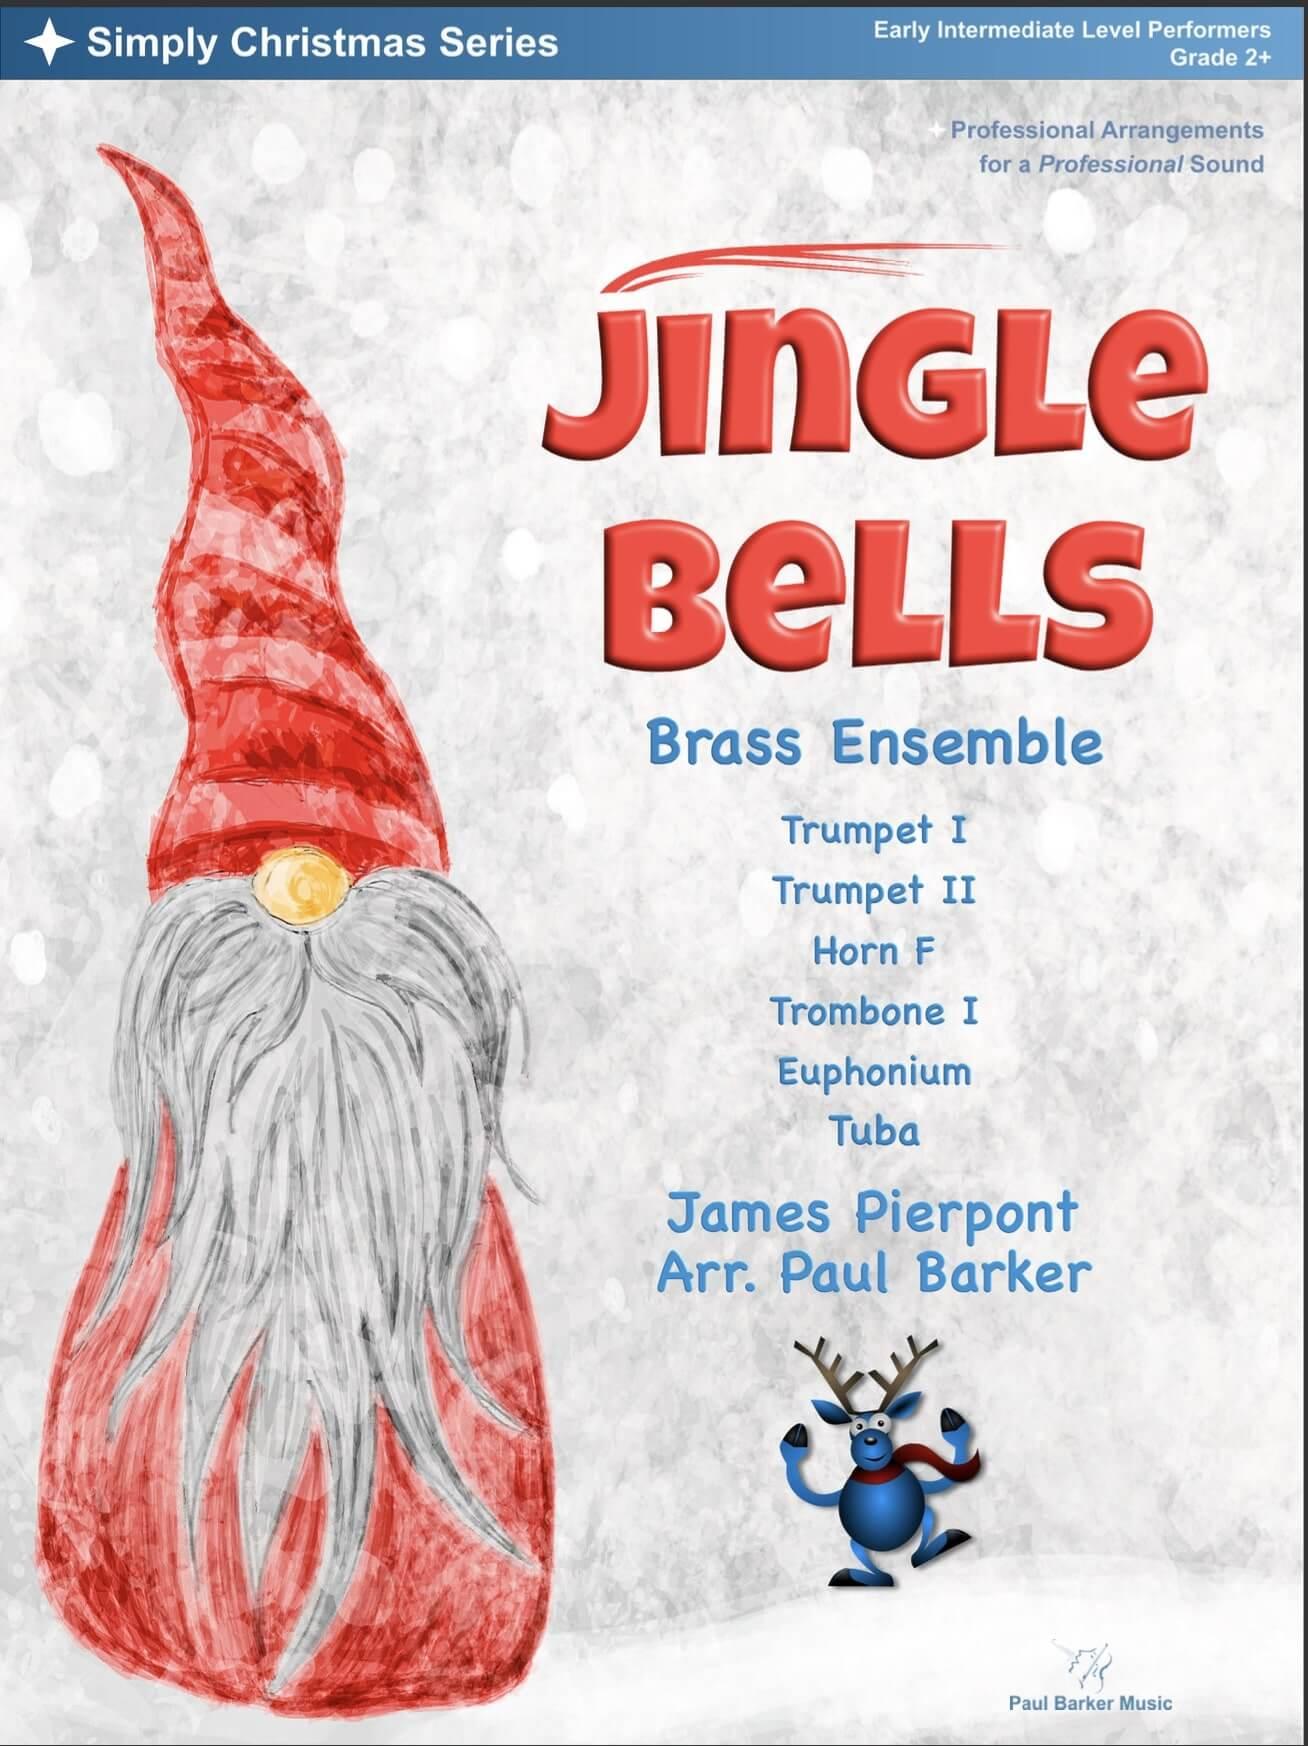 Jingle Bells (Brass Ensemble) - Paul Barker Music 